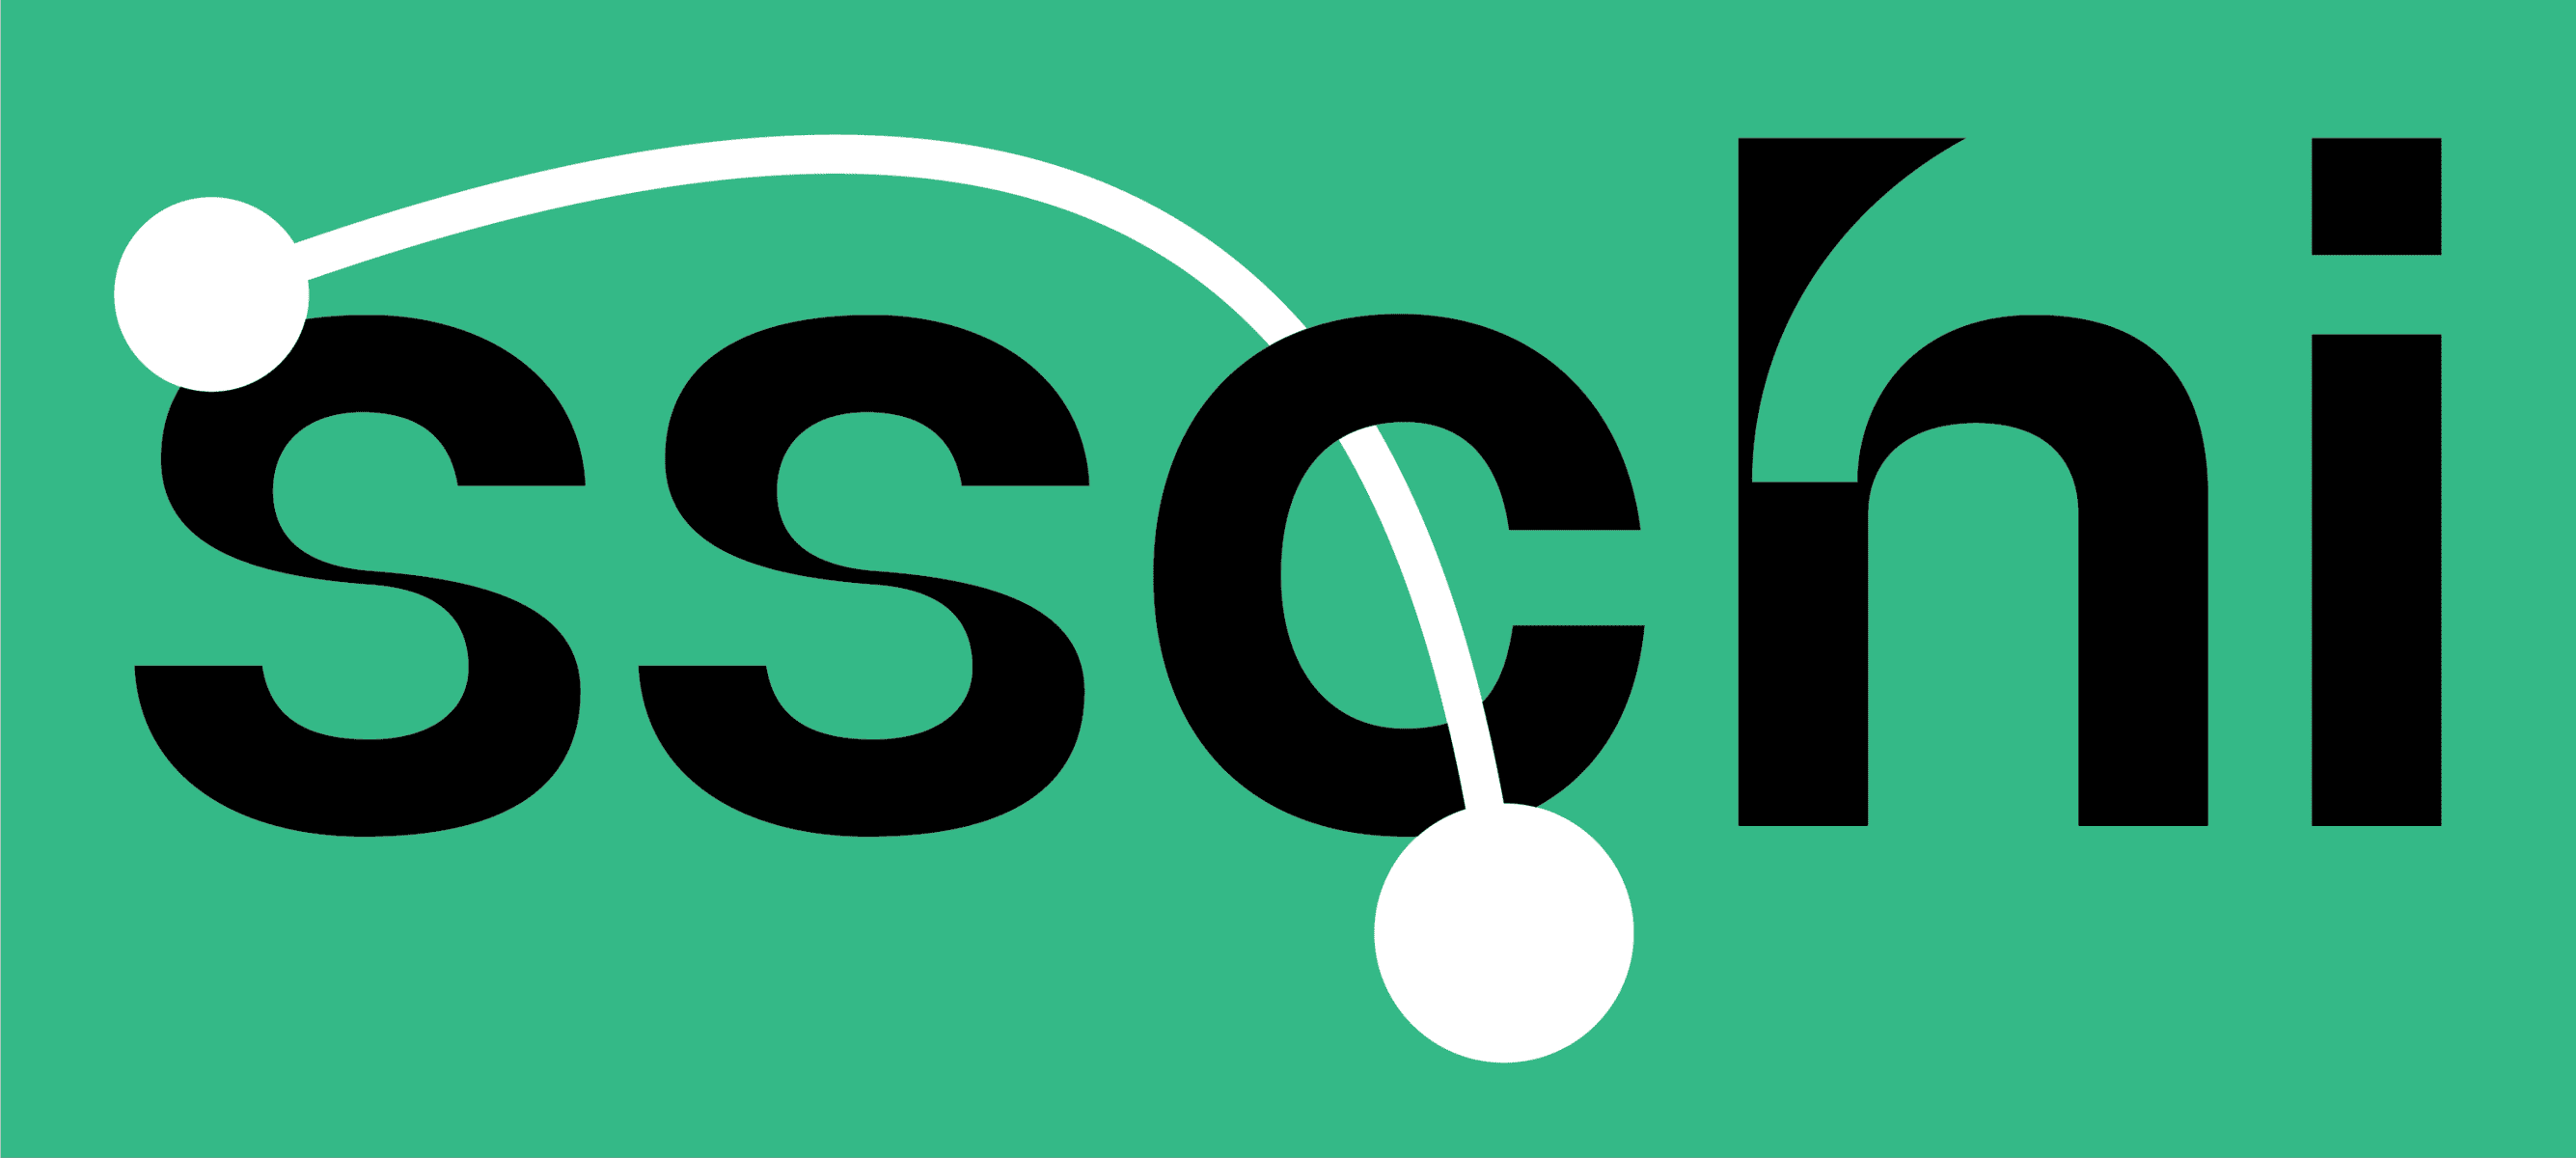 sschi logo